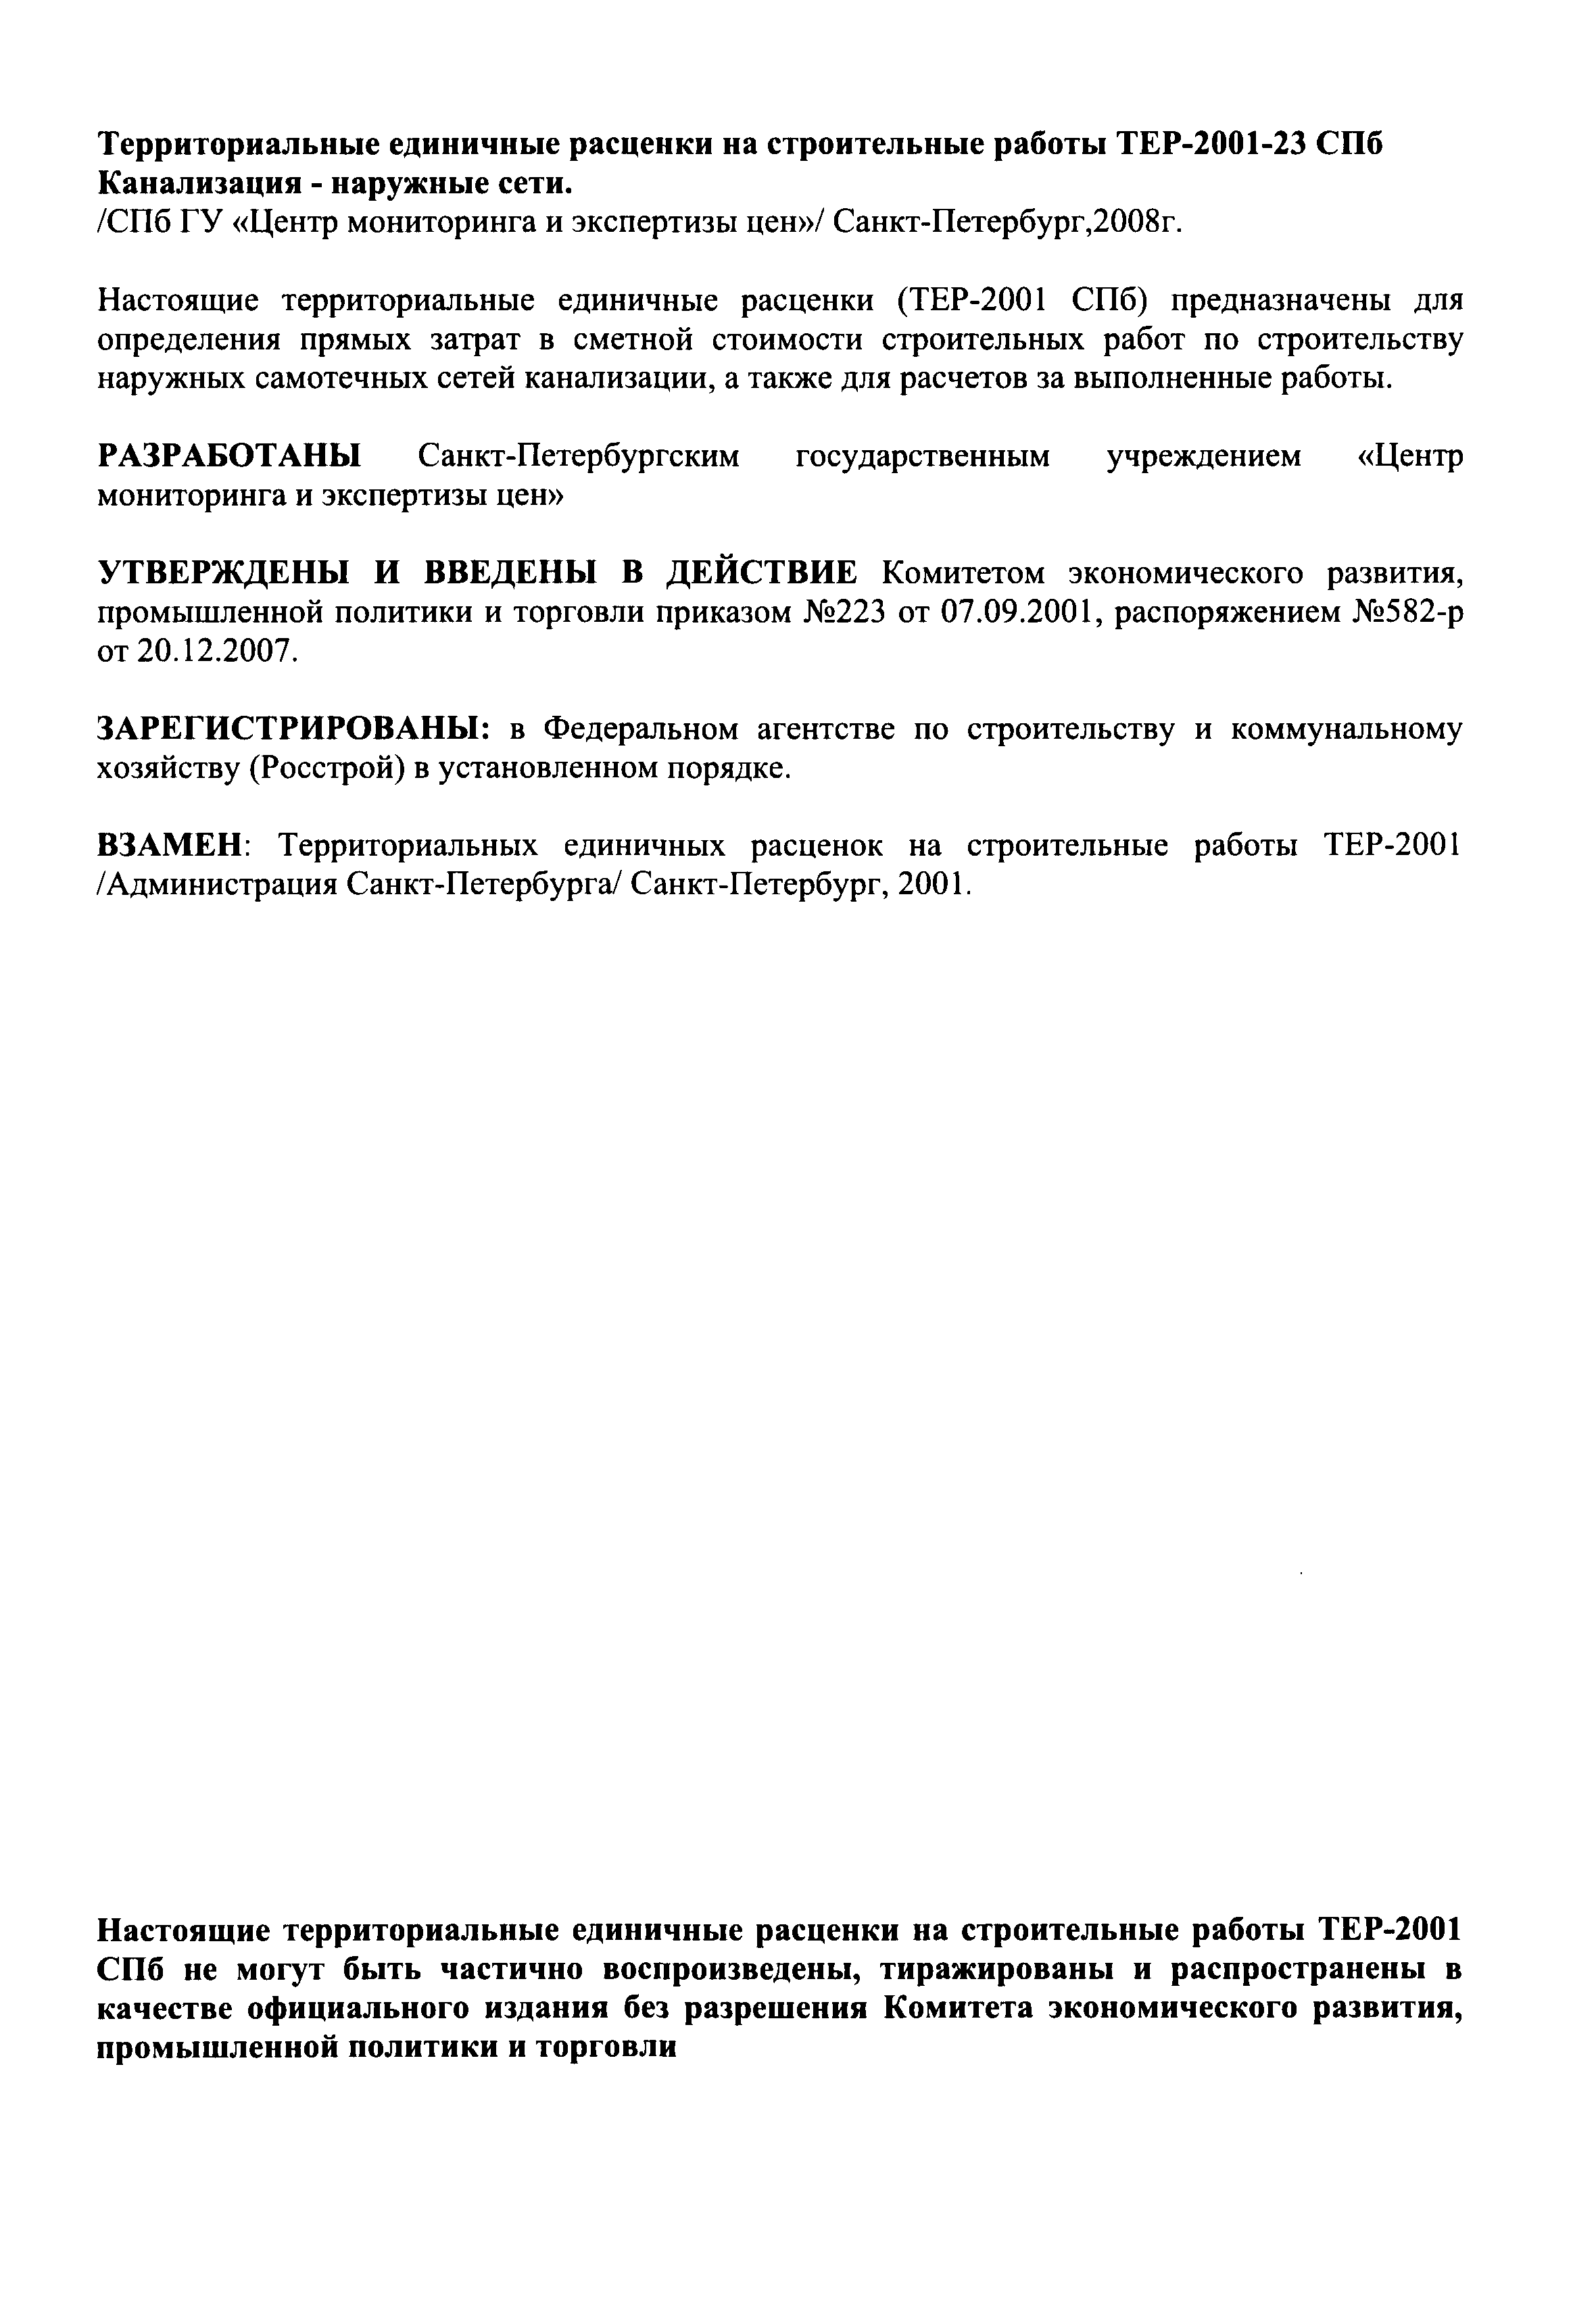 ТЕР 2001-23 СПб